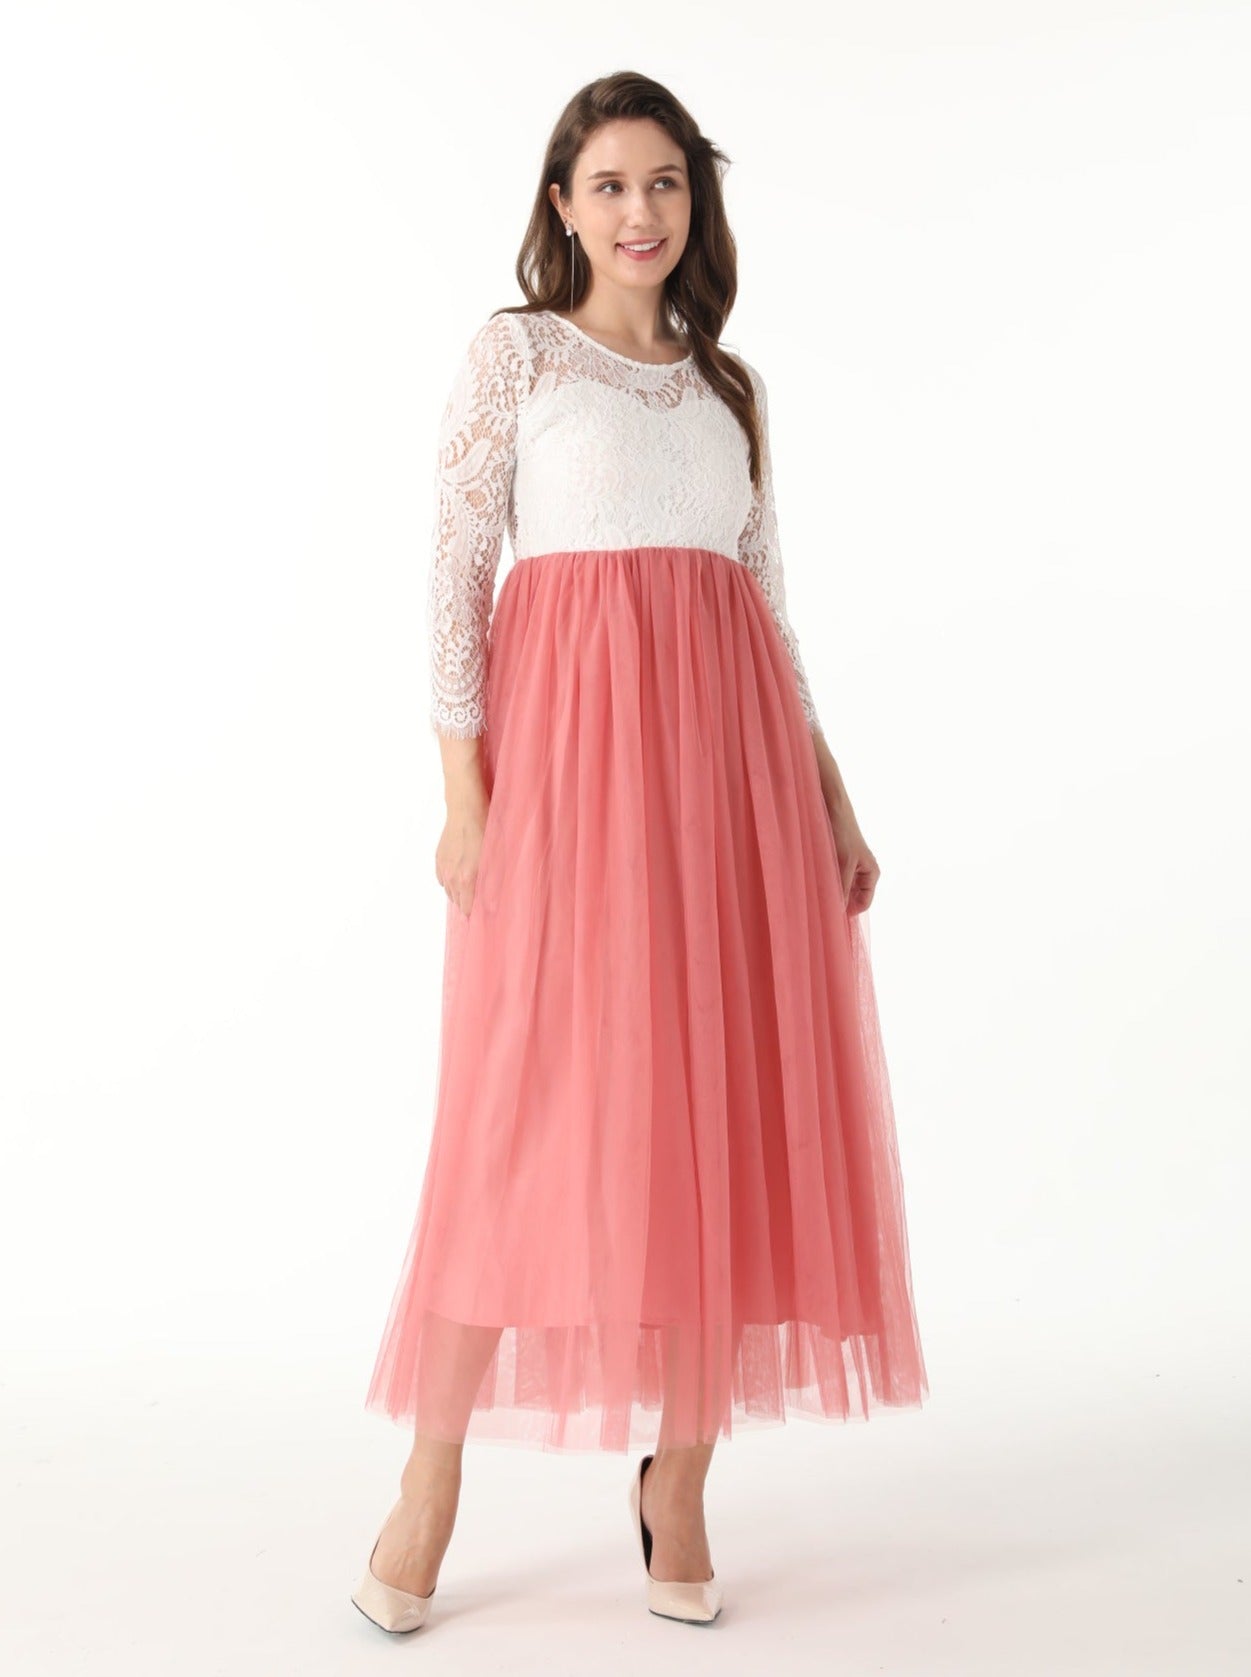 Peony Lace Dress for Women in Dusty Pink